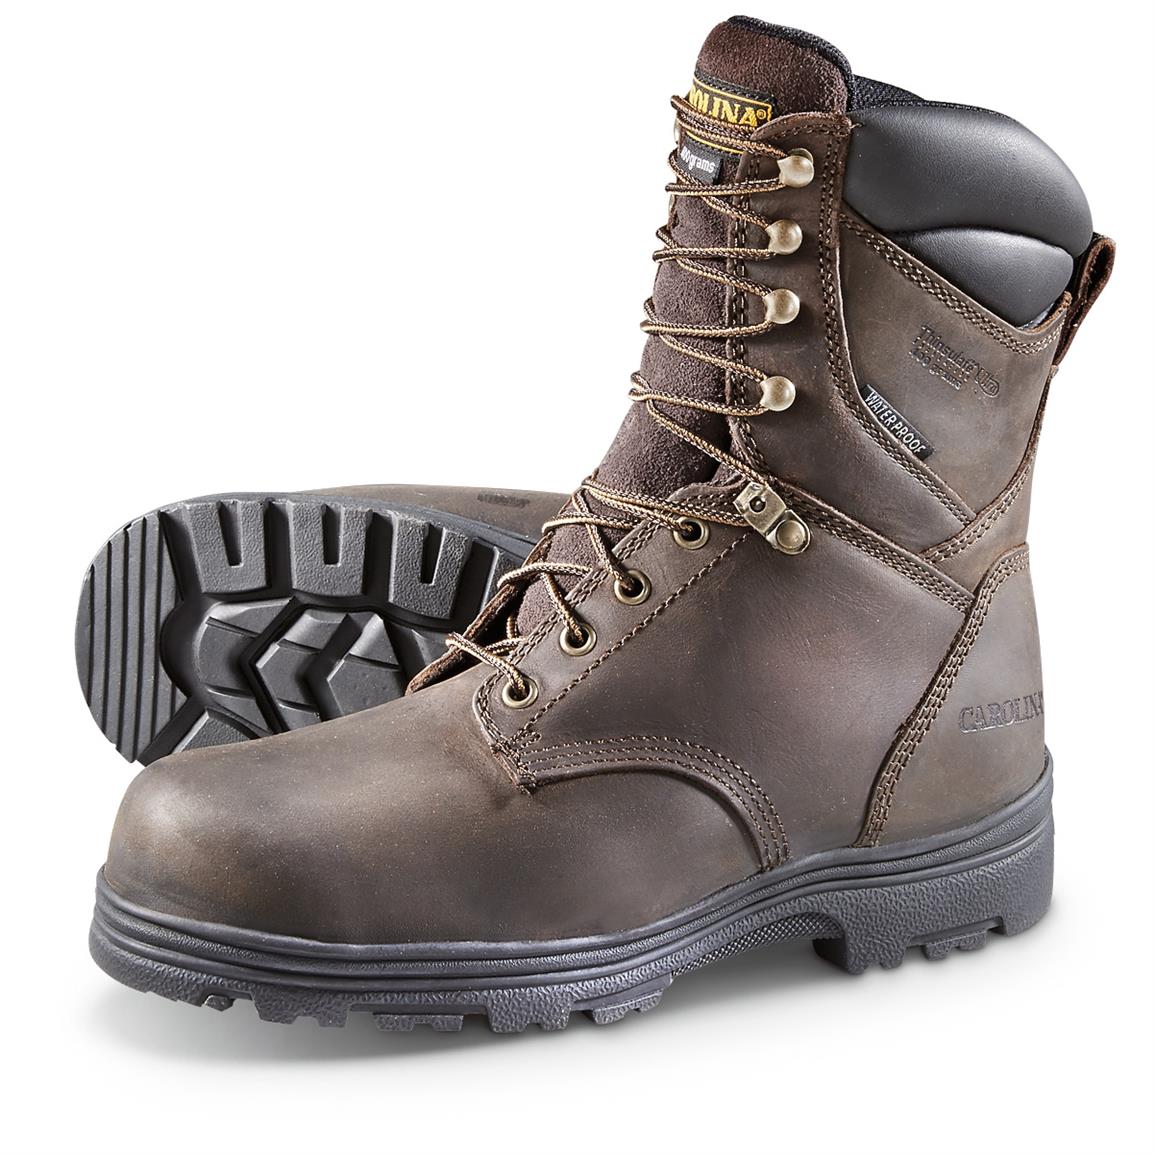 Carolina Insulated Waterproof Work Boots, 400 Grams - 645629, Work ...